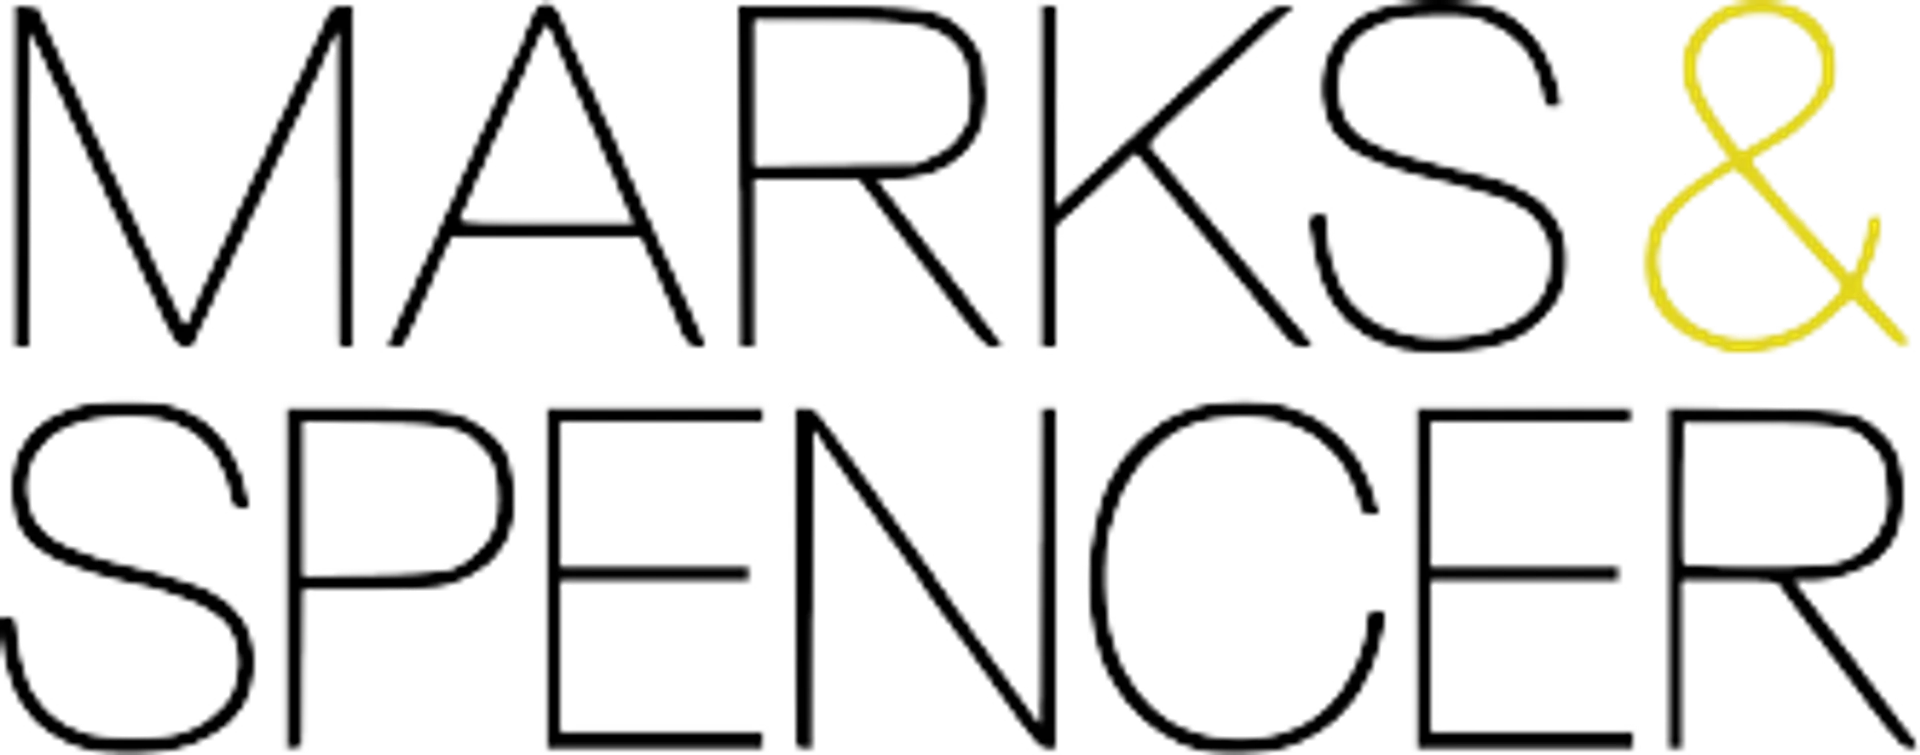 MARKS & SPENCER logo of current catalogue